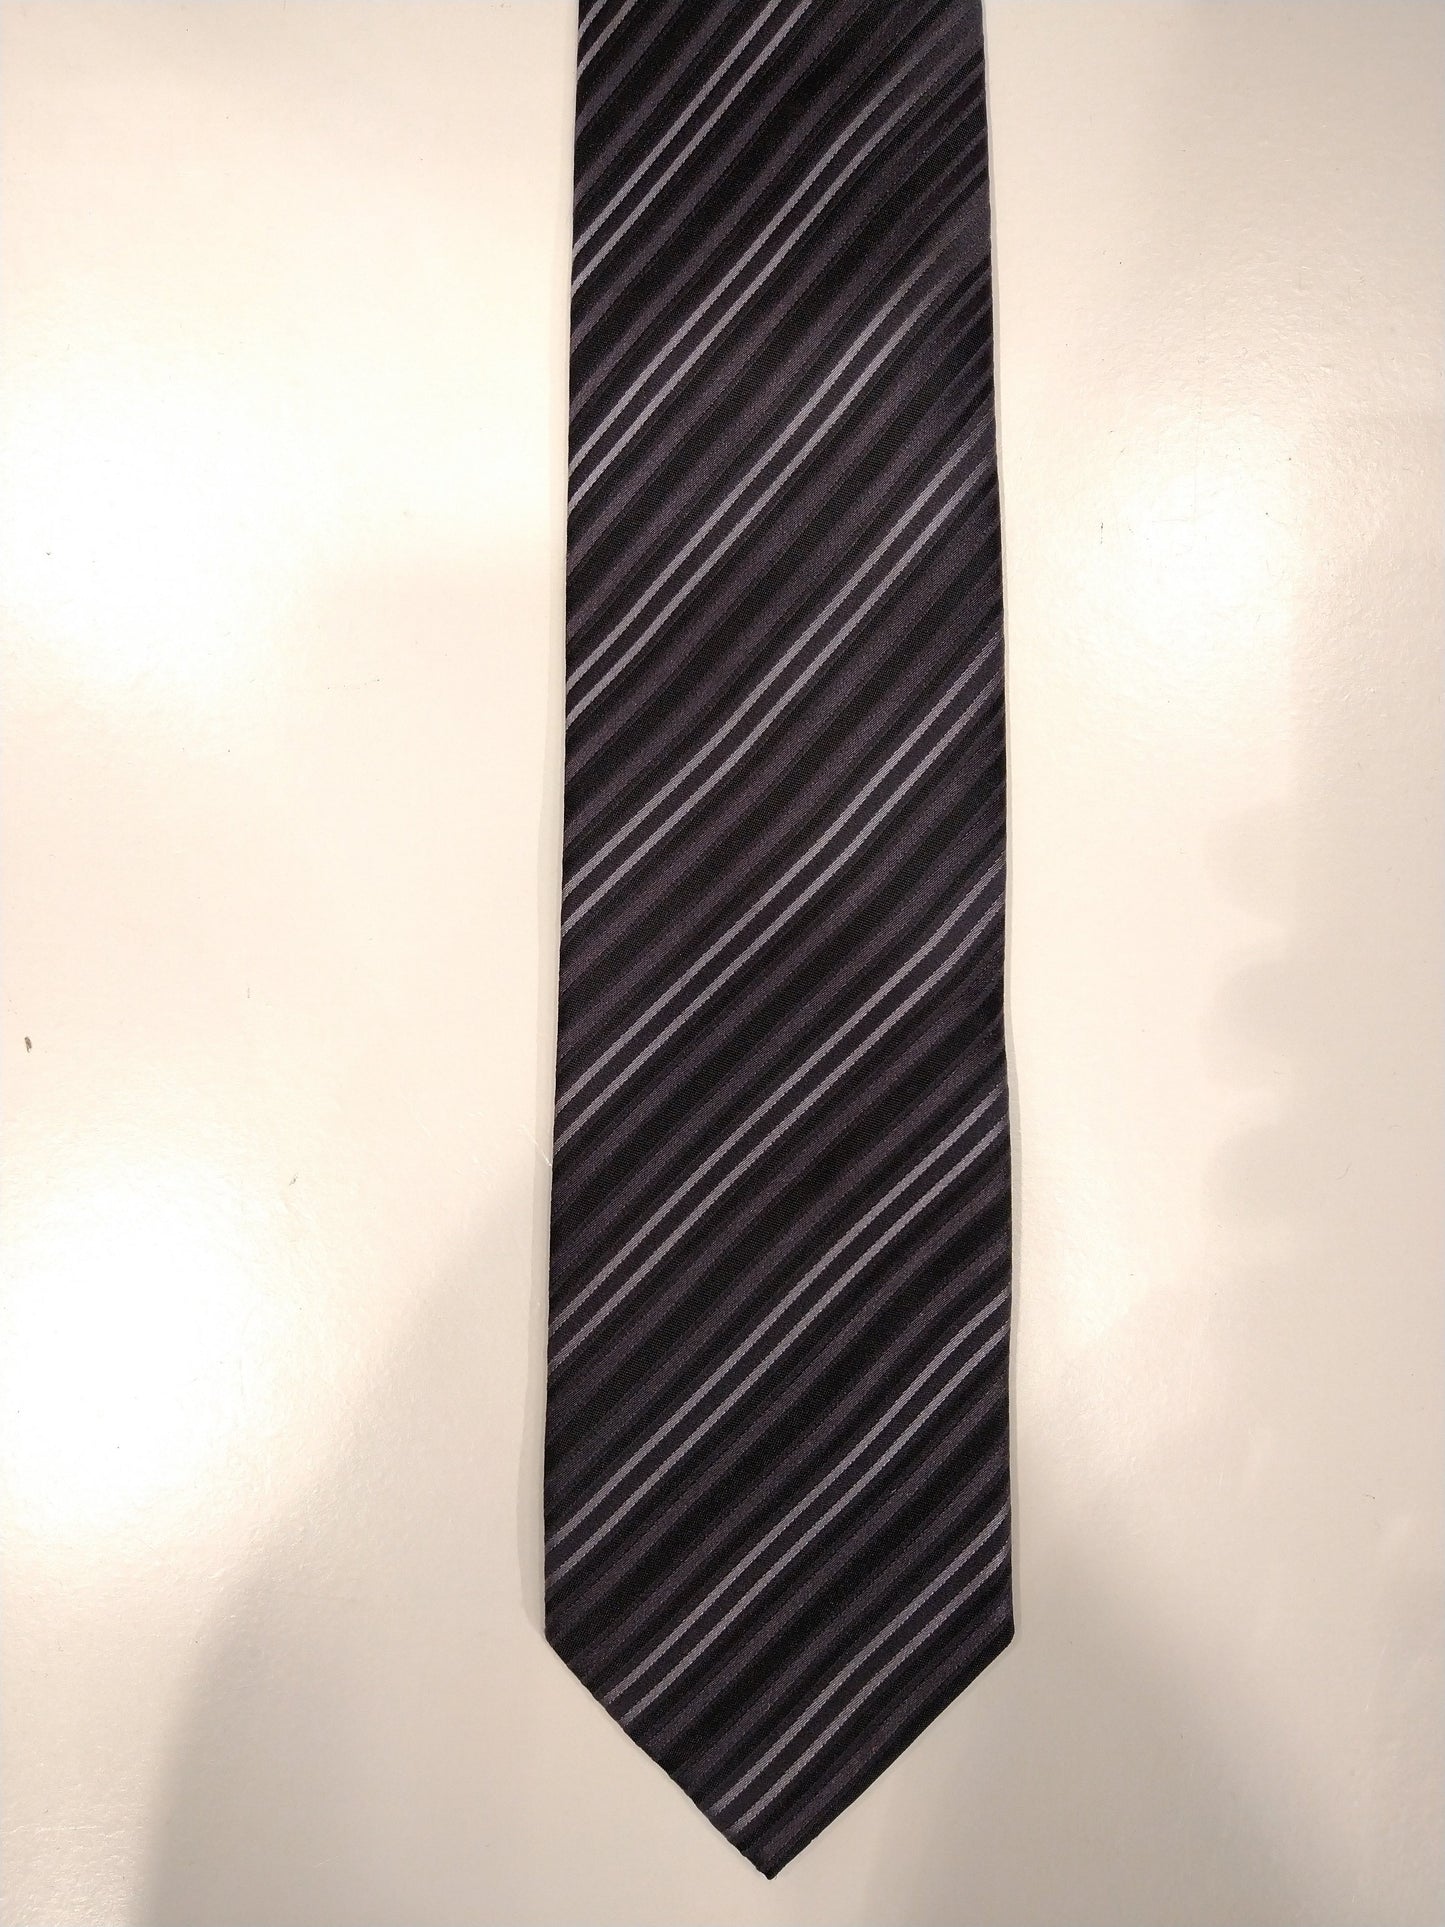 Silk tie. Black and white striped motif